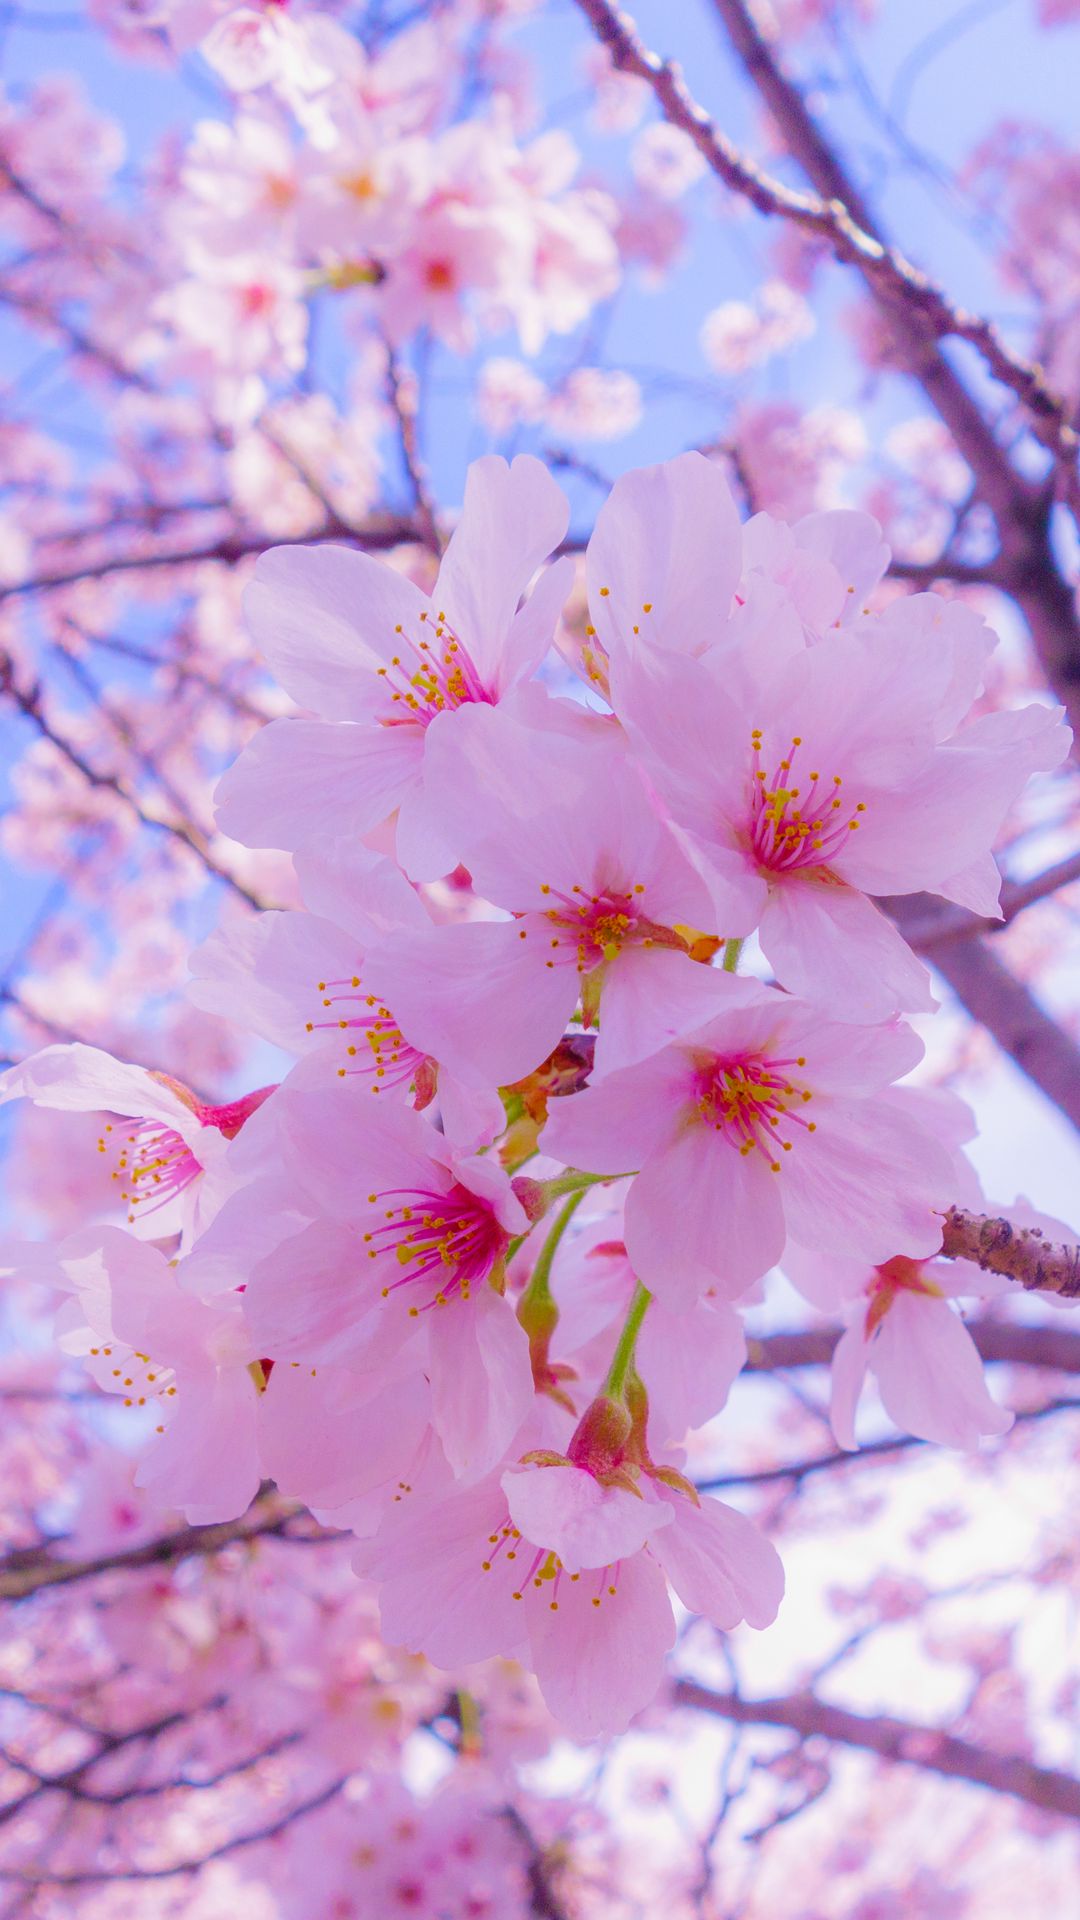 Download wallpaper  1080x1920 sakura flowers  bloom 